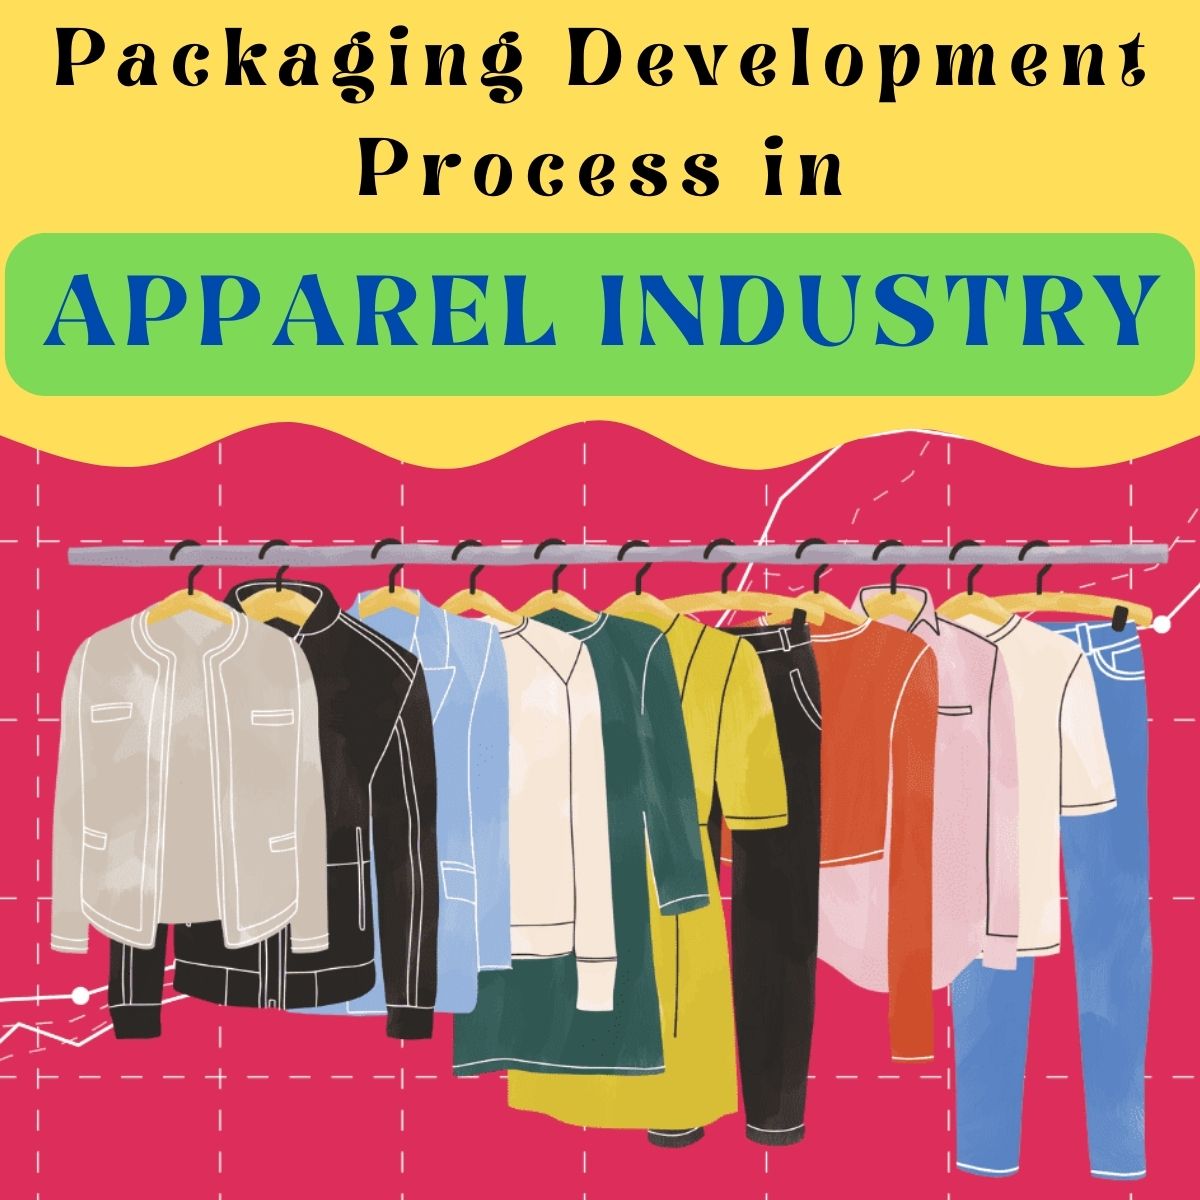 Packaging Development Process in APPAREL INDUSTRY